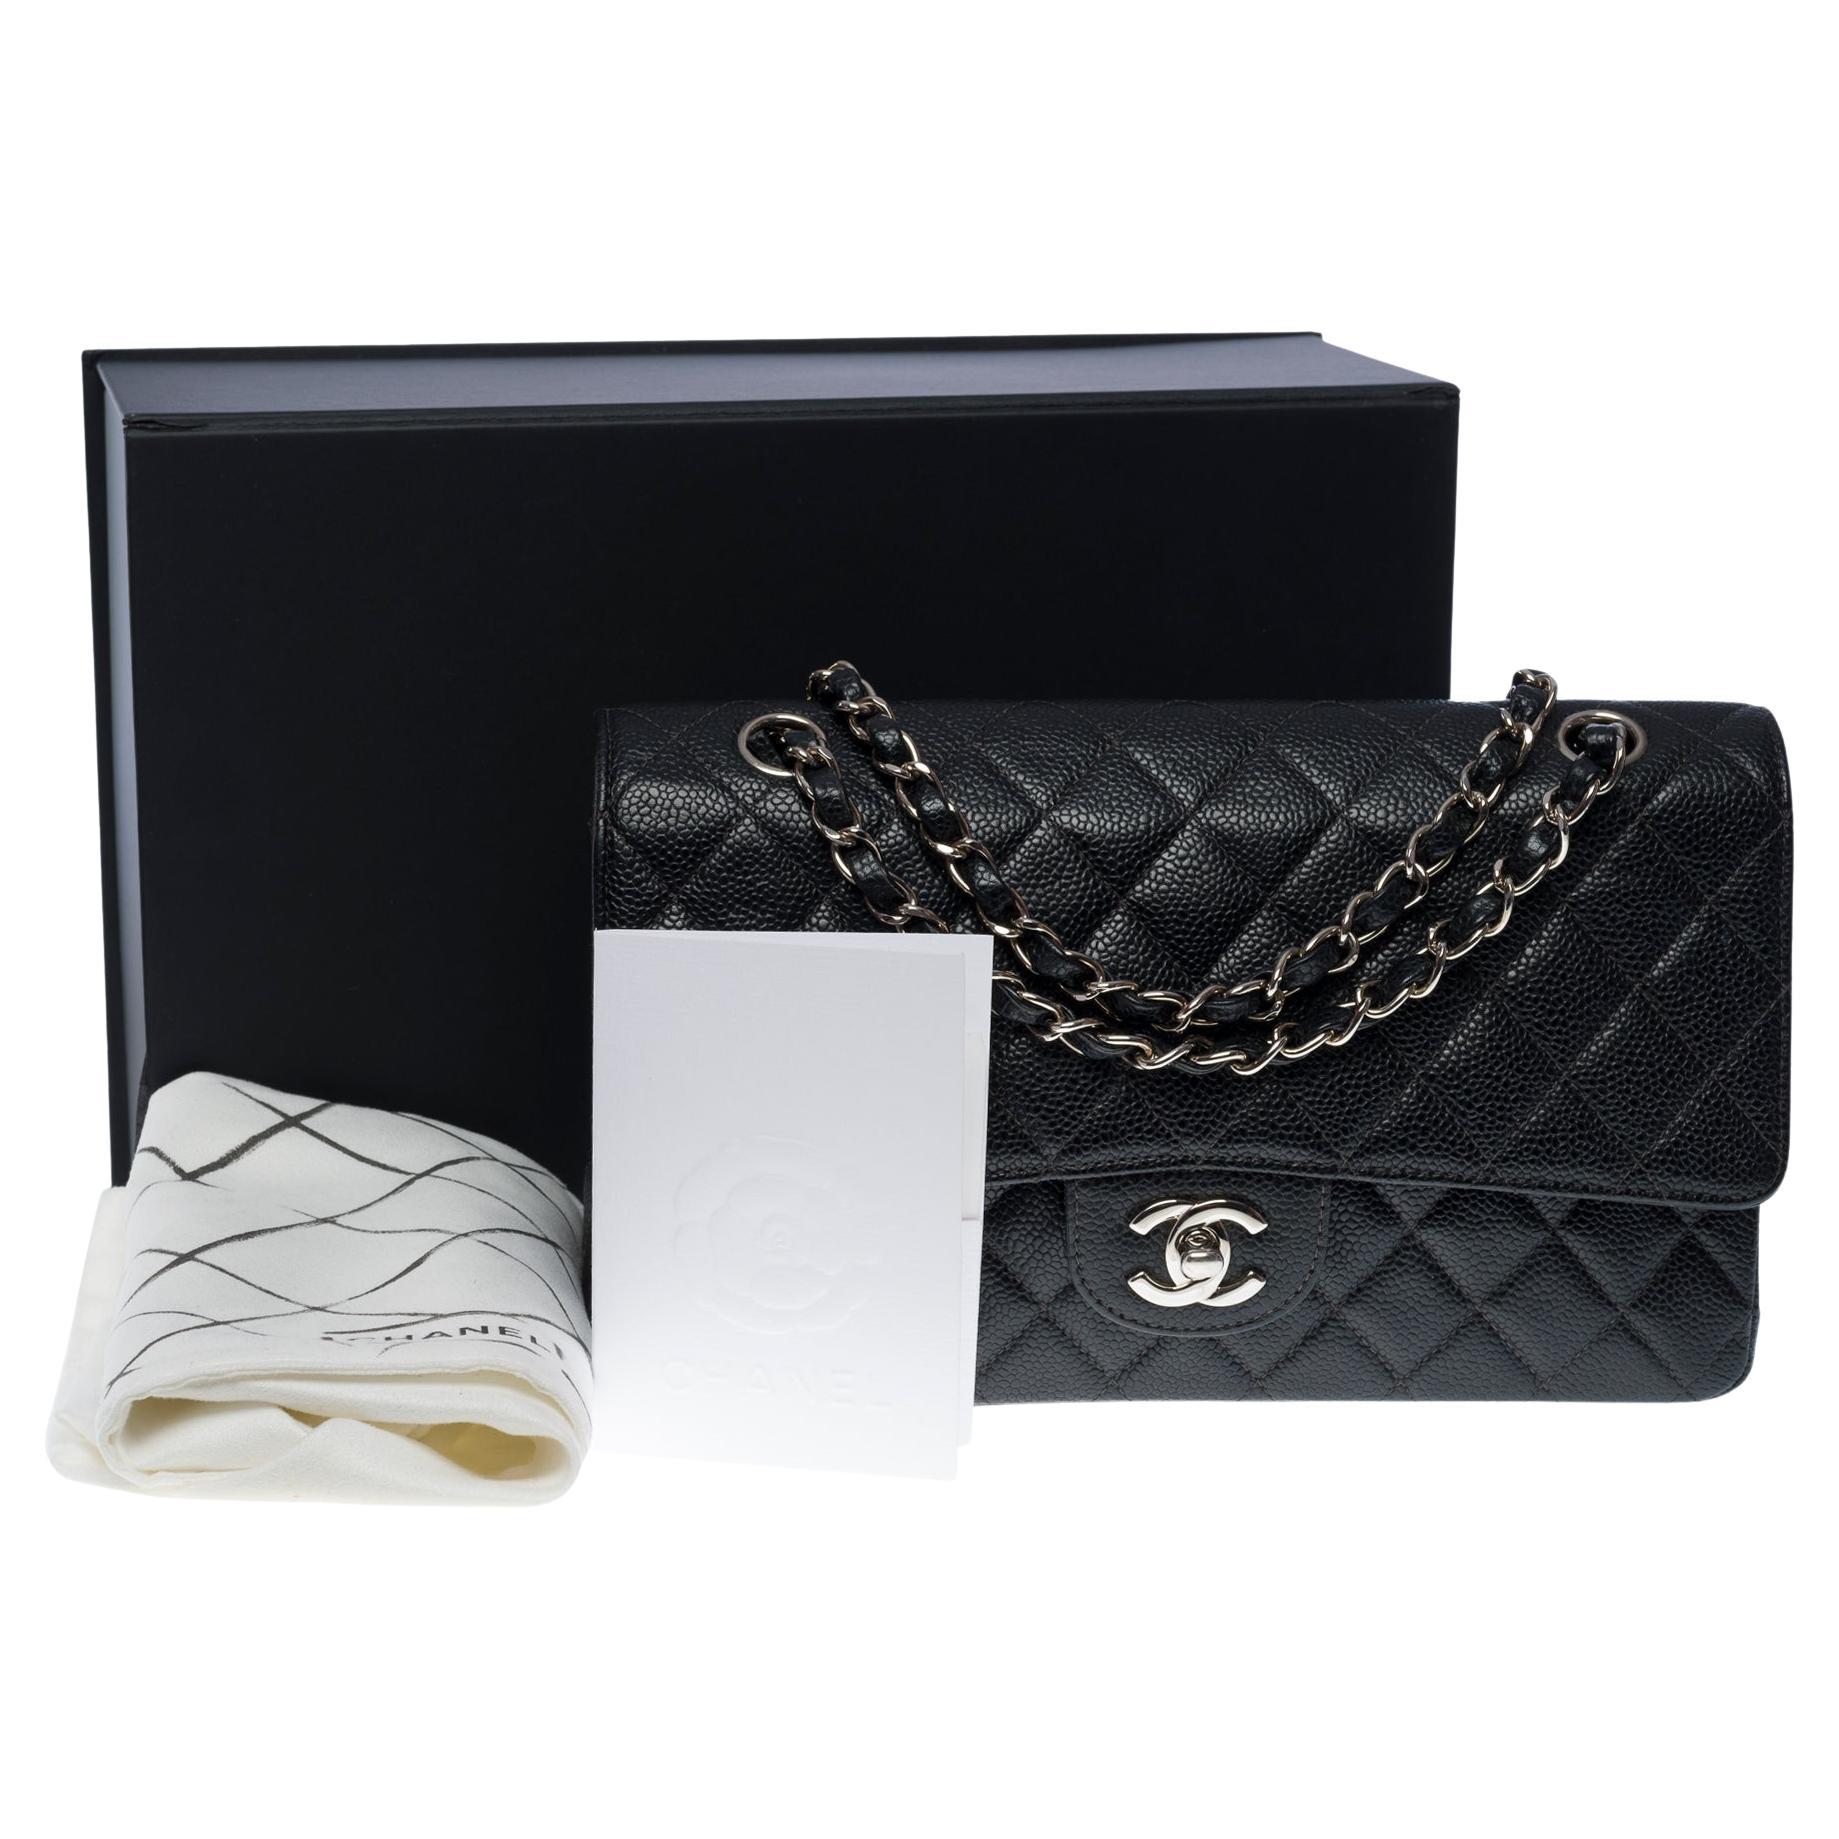 Chanel Timeless Medium 25cm double flap shoulder bag in black caviar leather, SHW